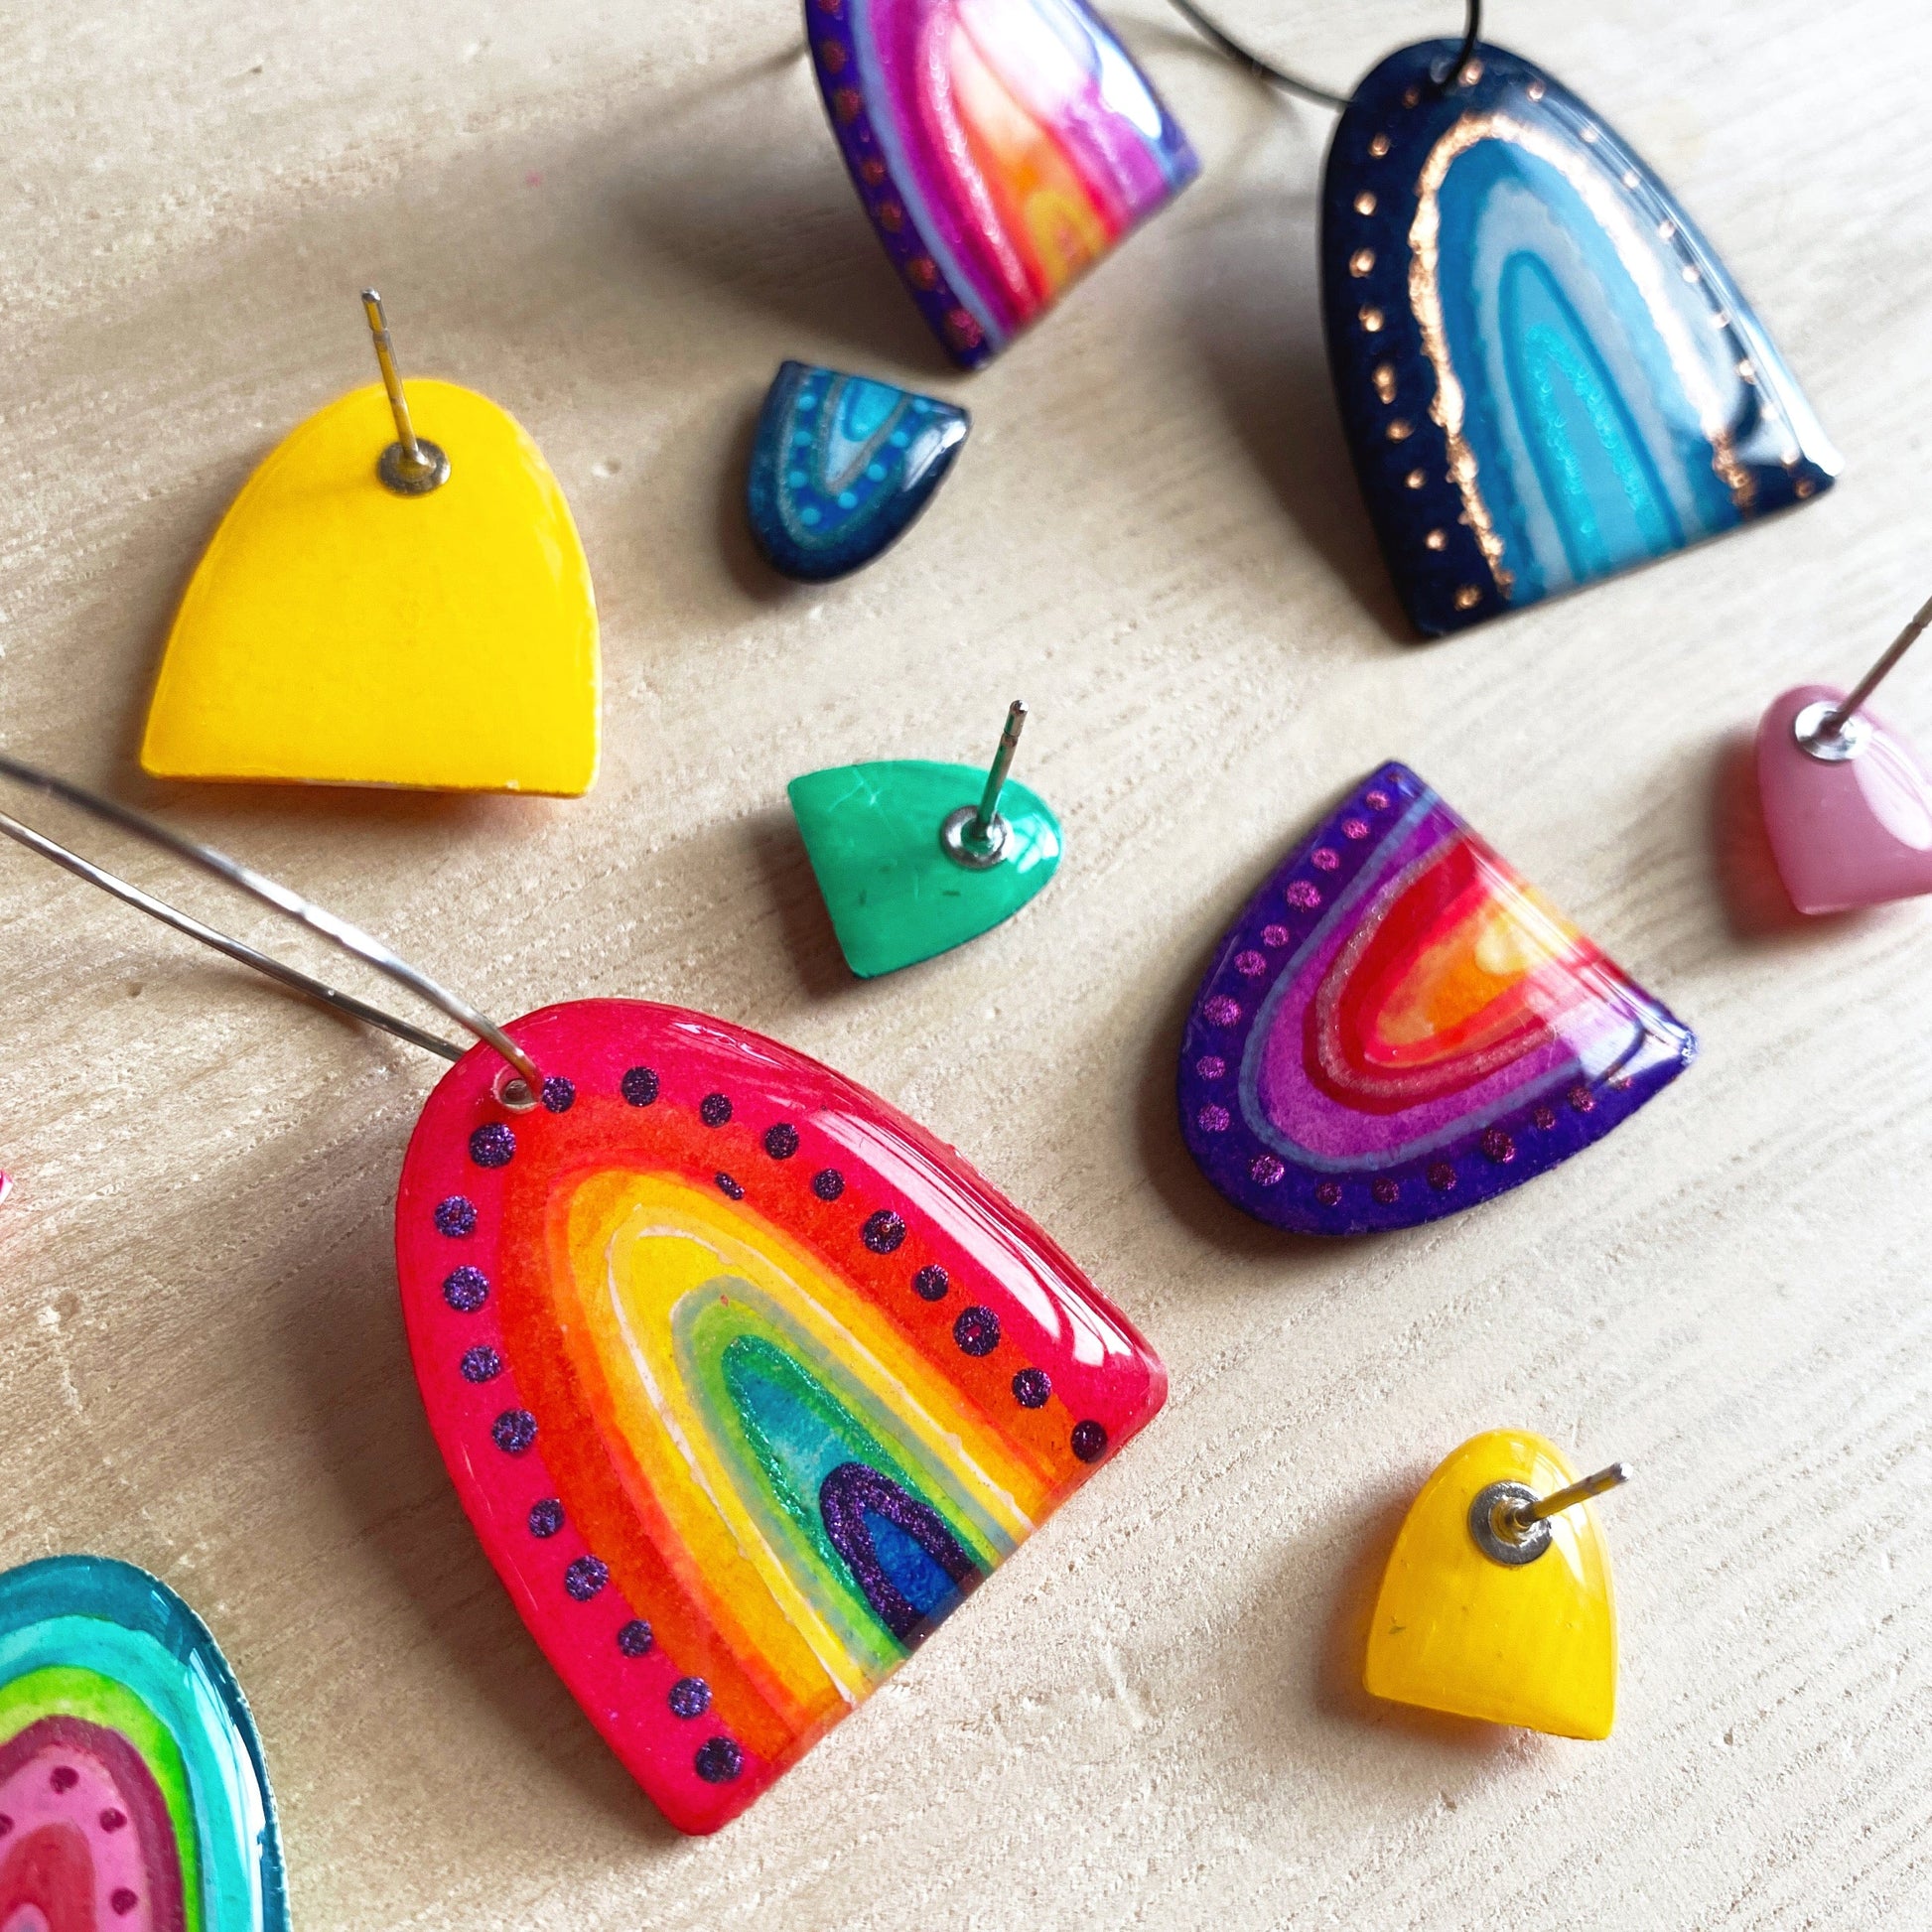 Lacroz Creations Earrings Rainbows | Midi Stud Earrings